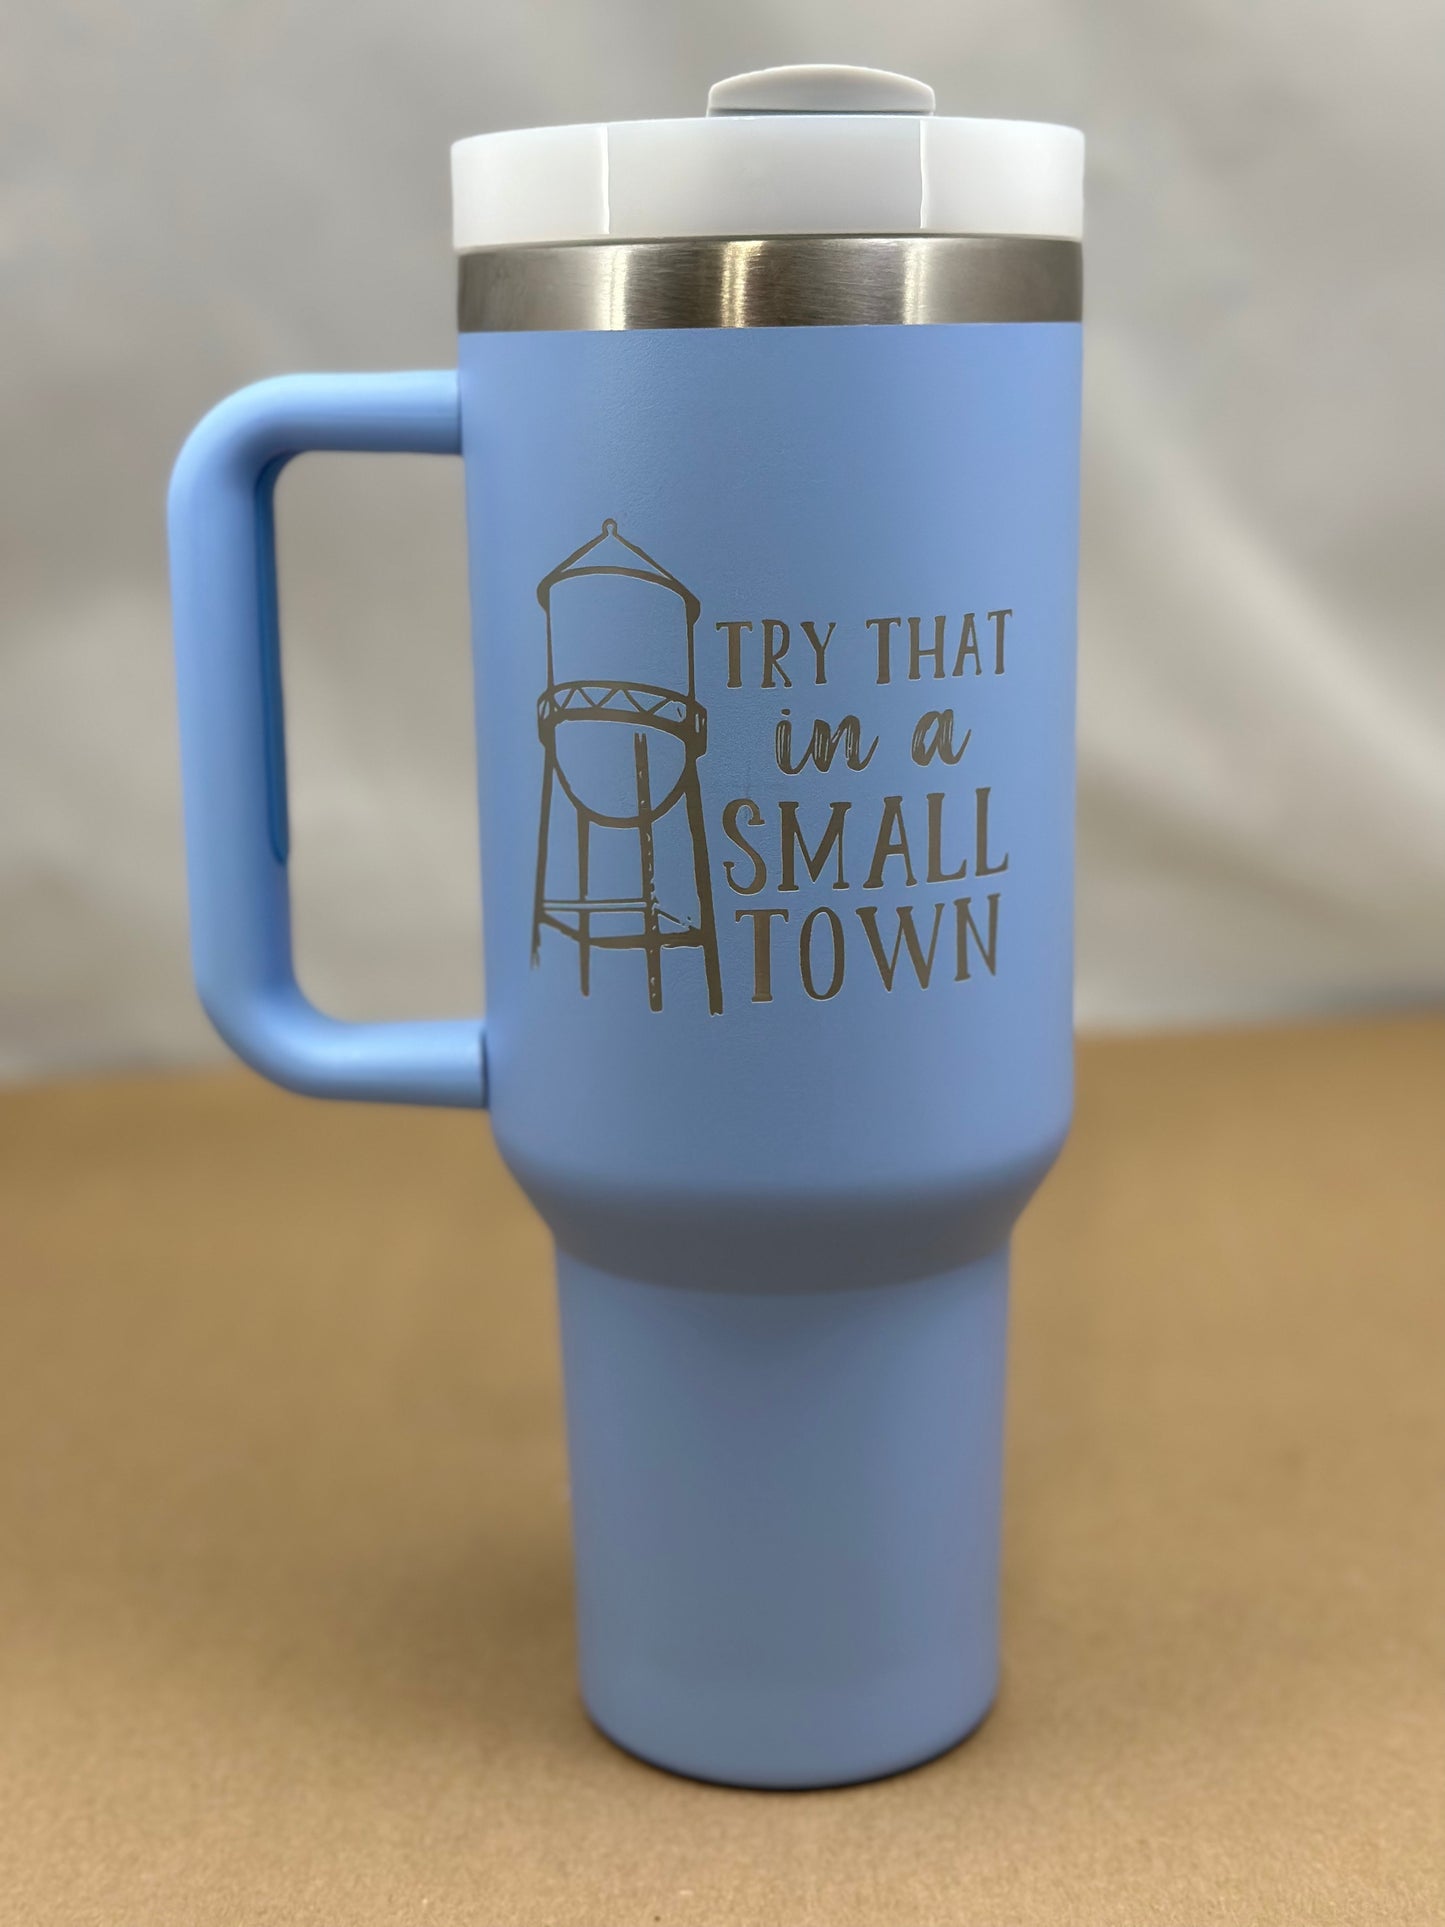 OA Travel mug with a handle